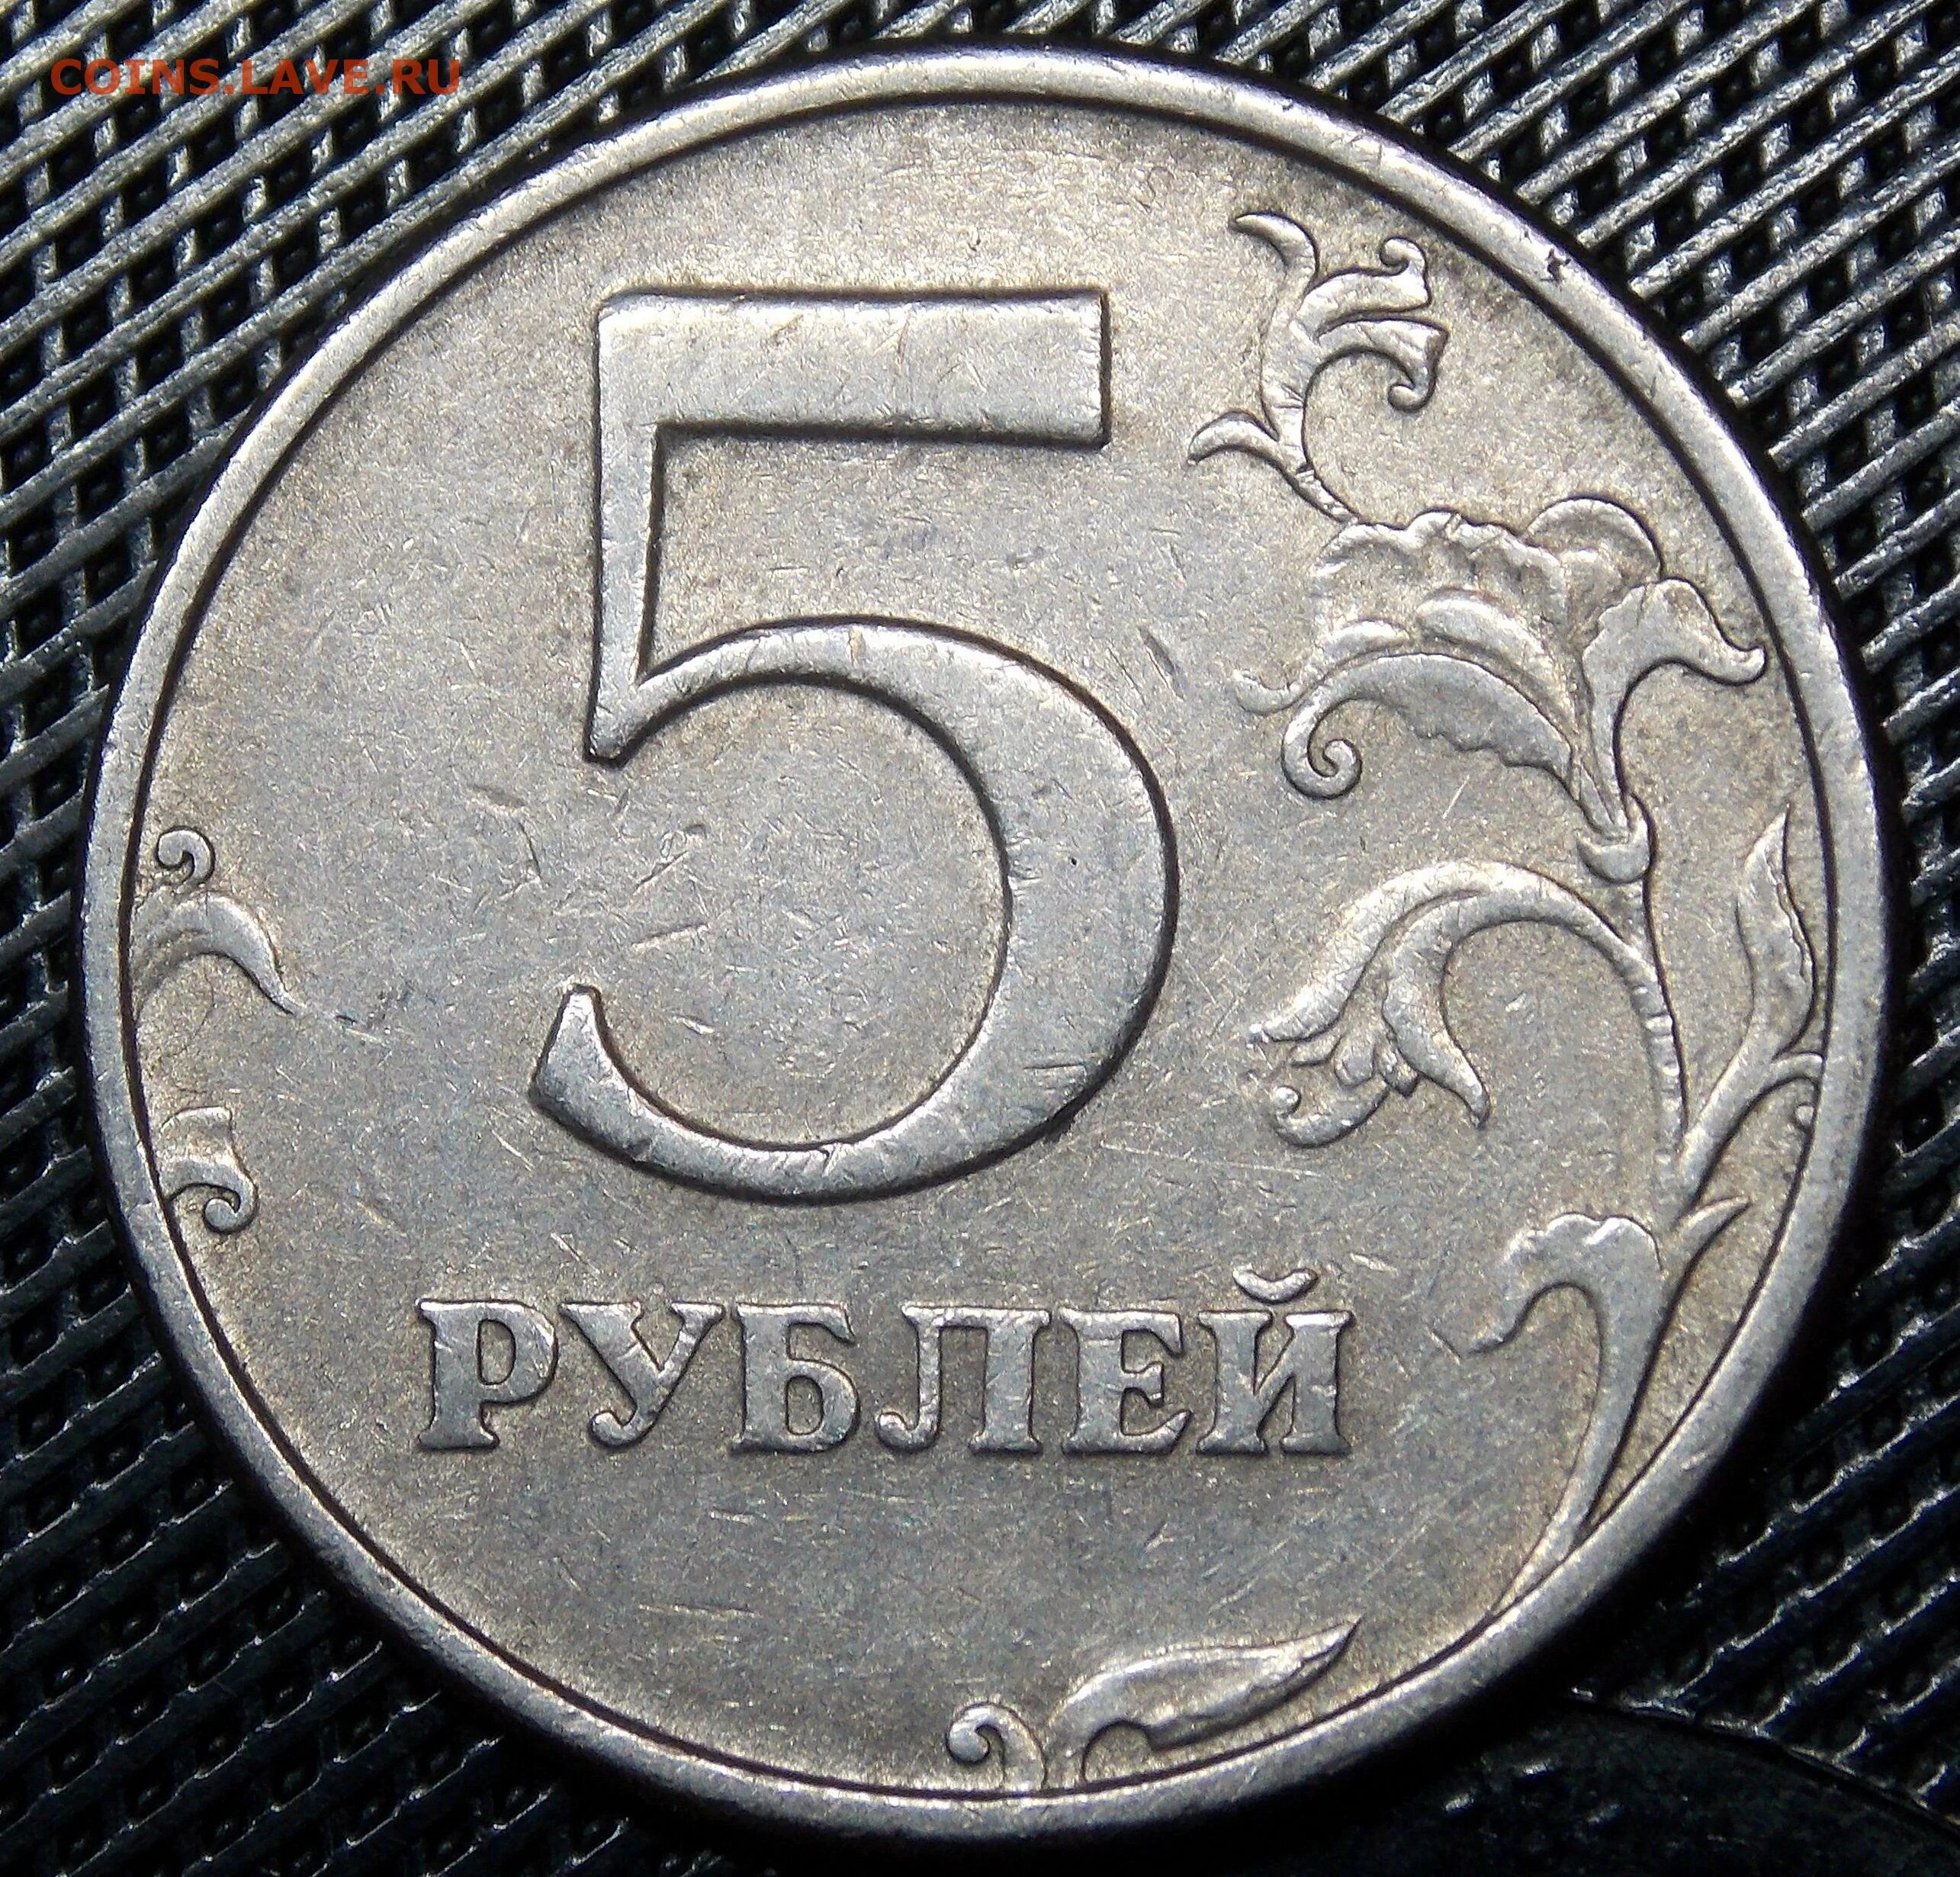 5 рублей 16 года. СПМД 5 рублей 1998 СПМД. Пять рублей 1998. 5 Рублей 1998 года цена стоимость ММД.